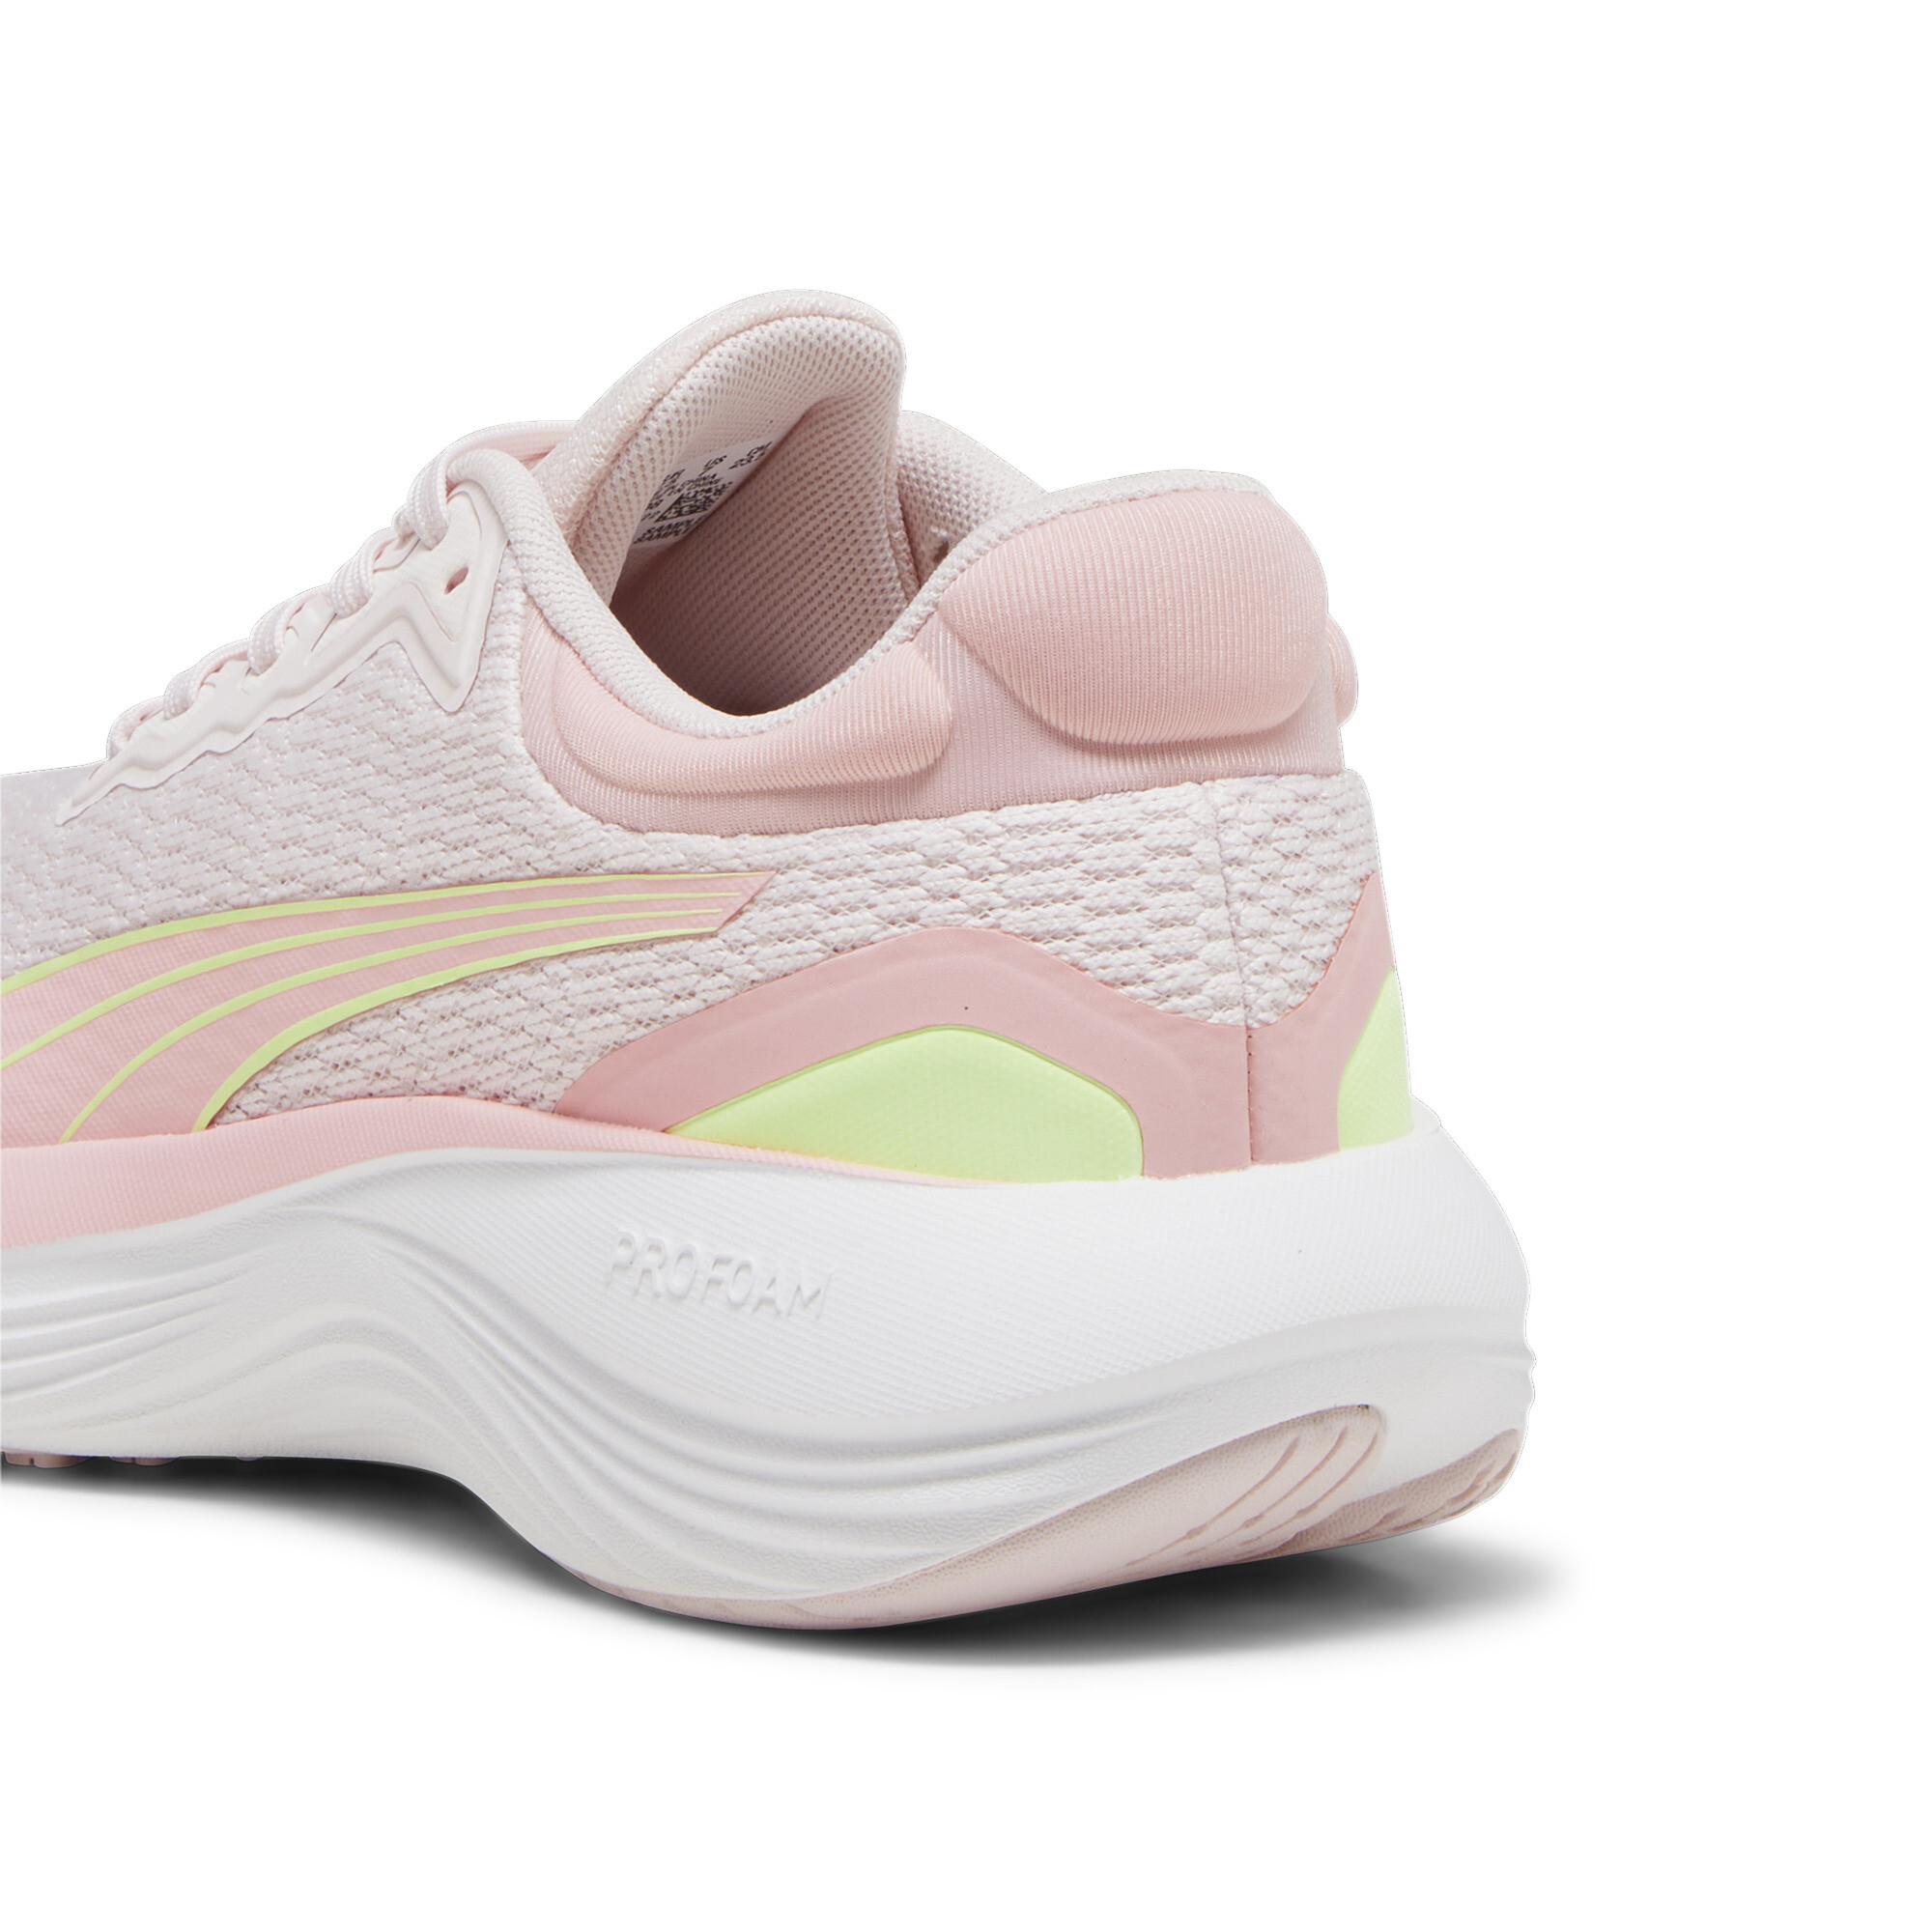 Men's PUMA Scend Pro Running Shoes In Pink, Size EU 41